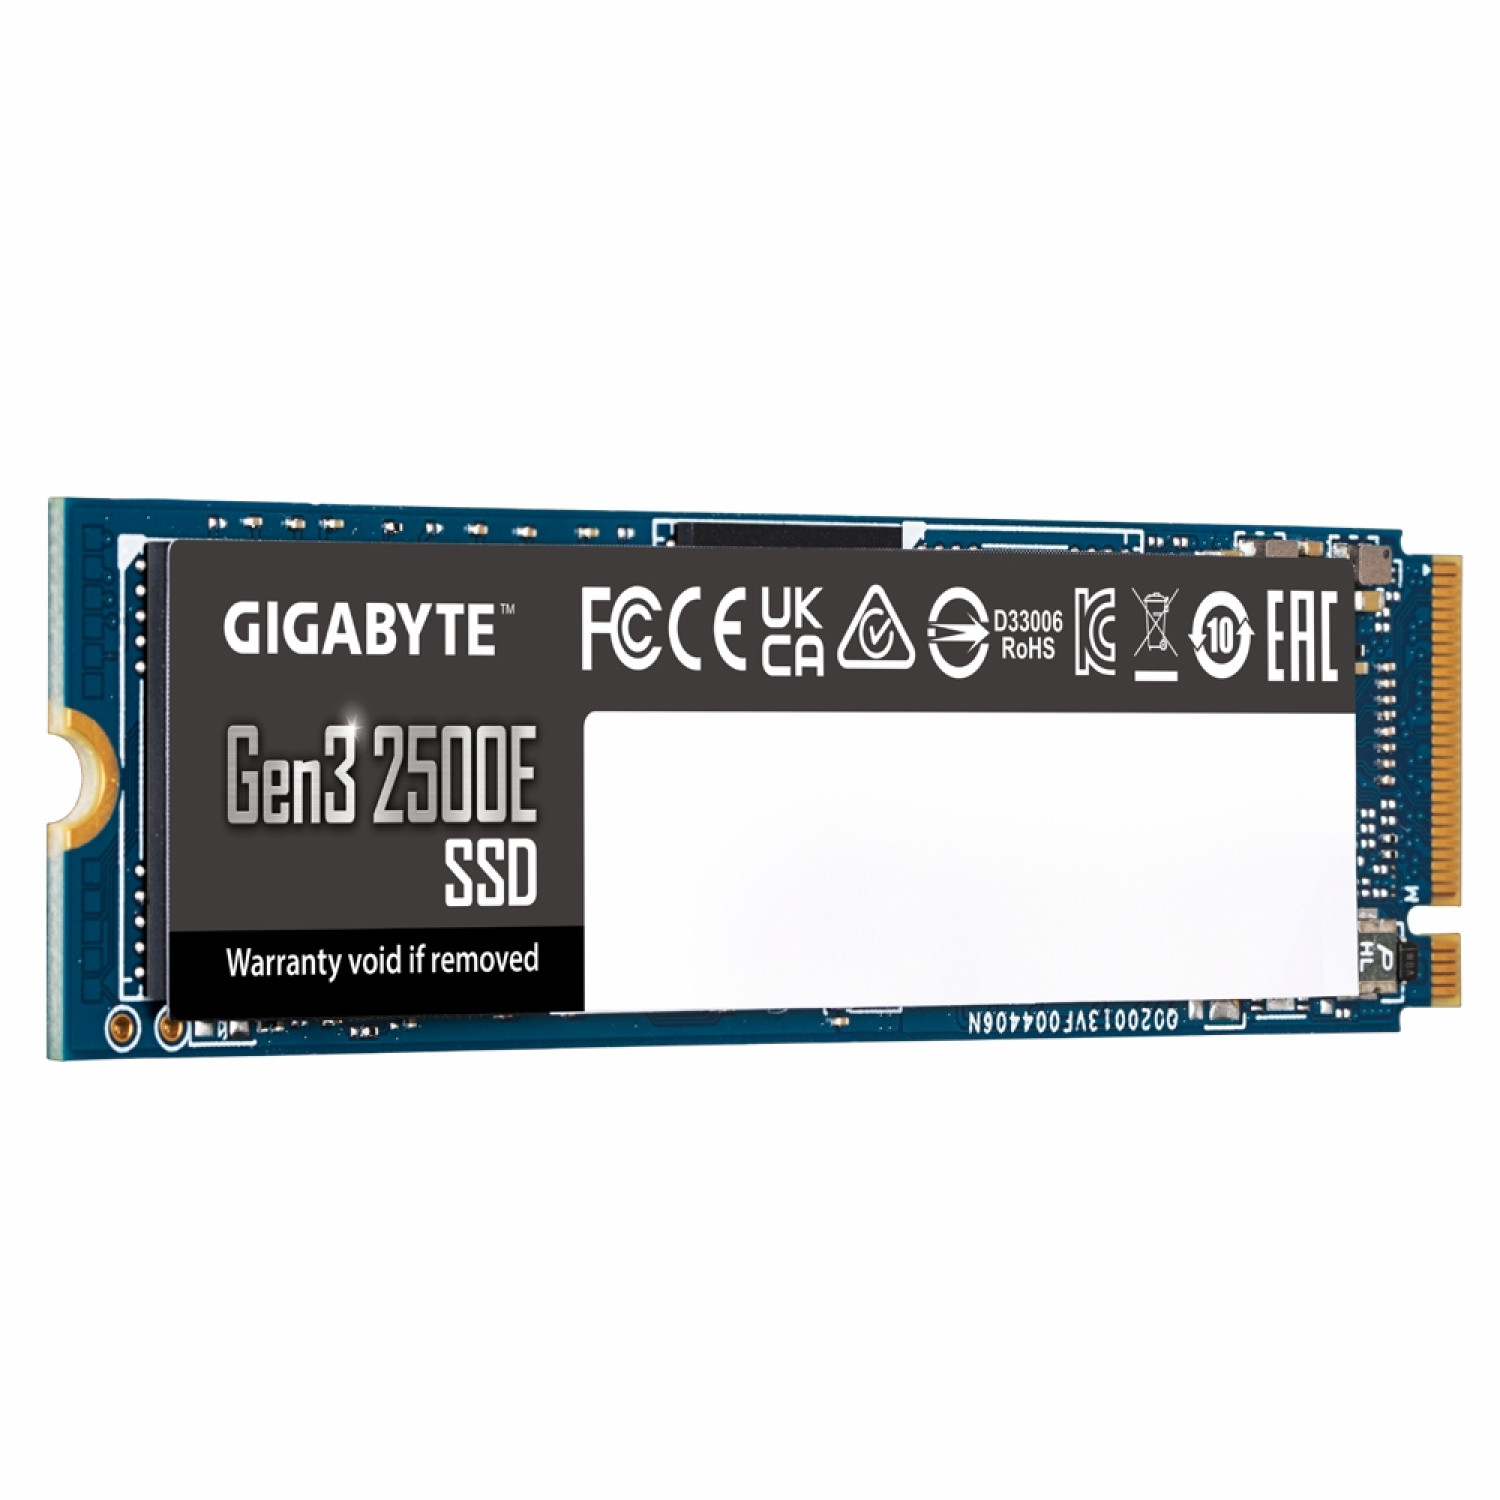 حافظه اس اس دی Gigabyte Gen3 2500E 500GB-3